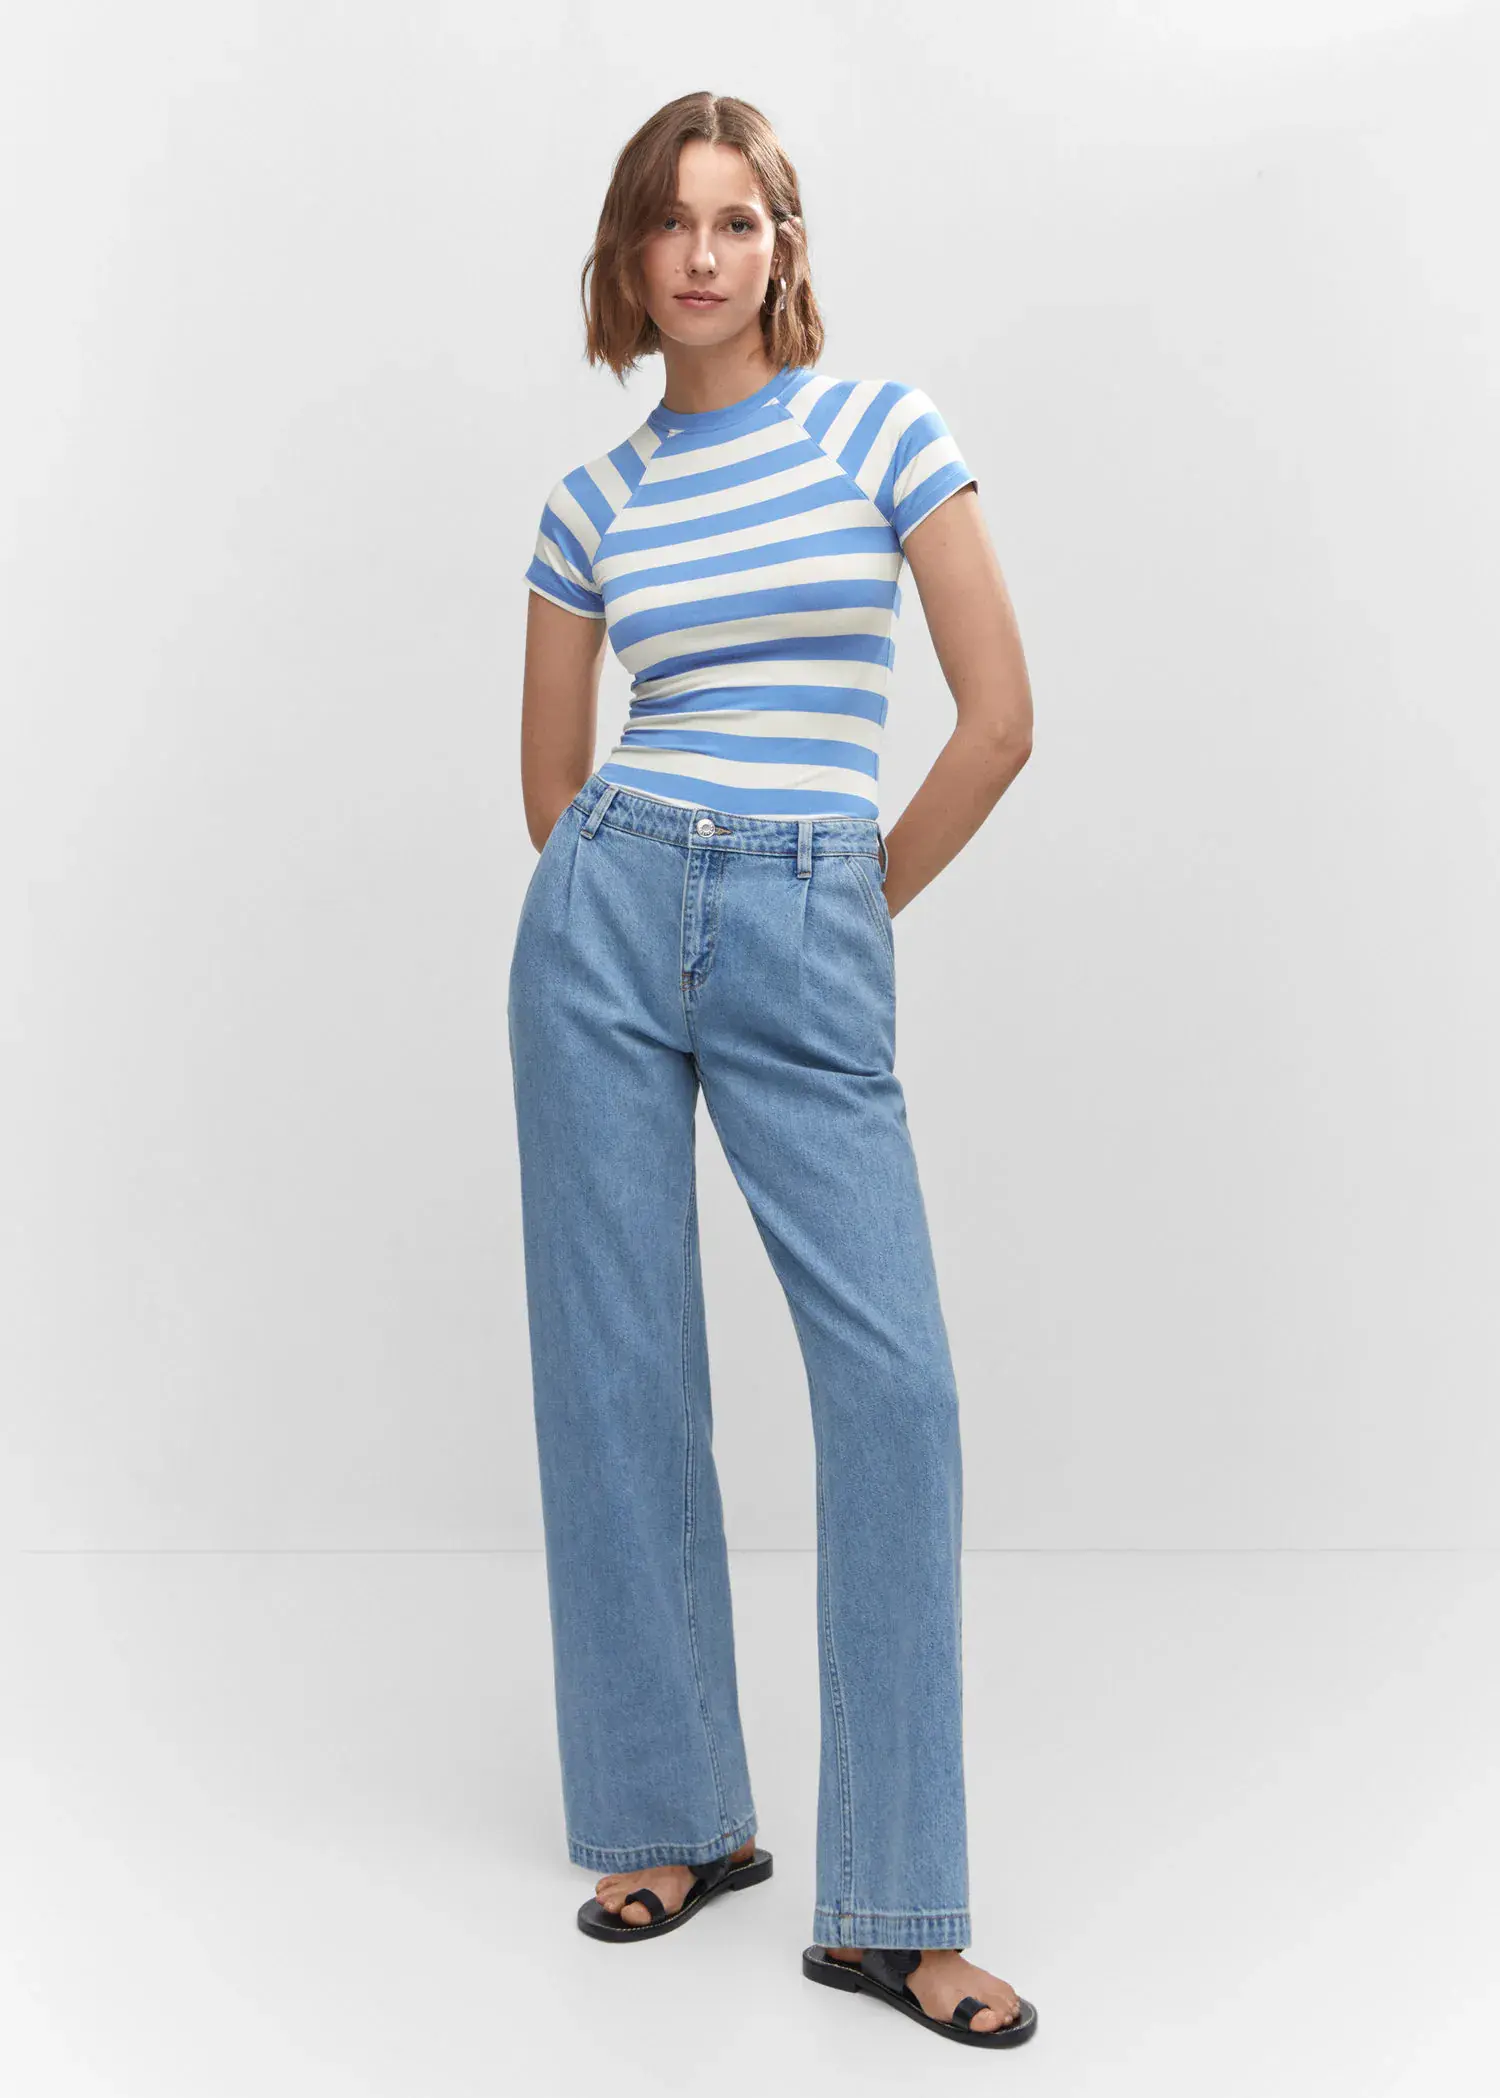 Mango Striped print T-shirt. a woman wearing a striped shirt and jeans. 